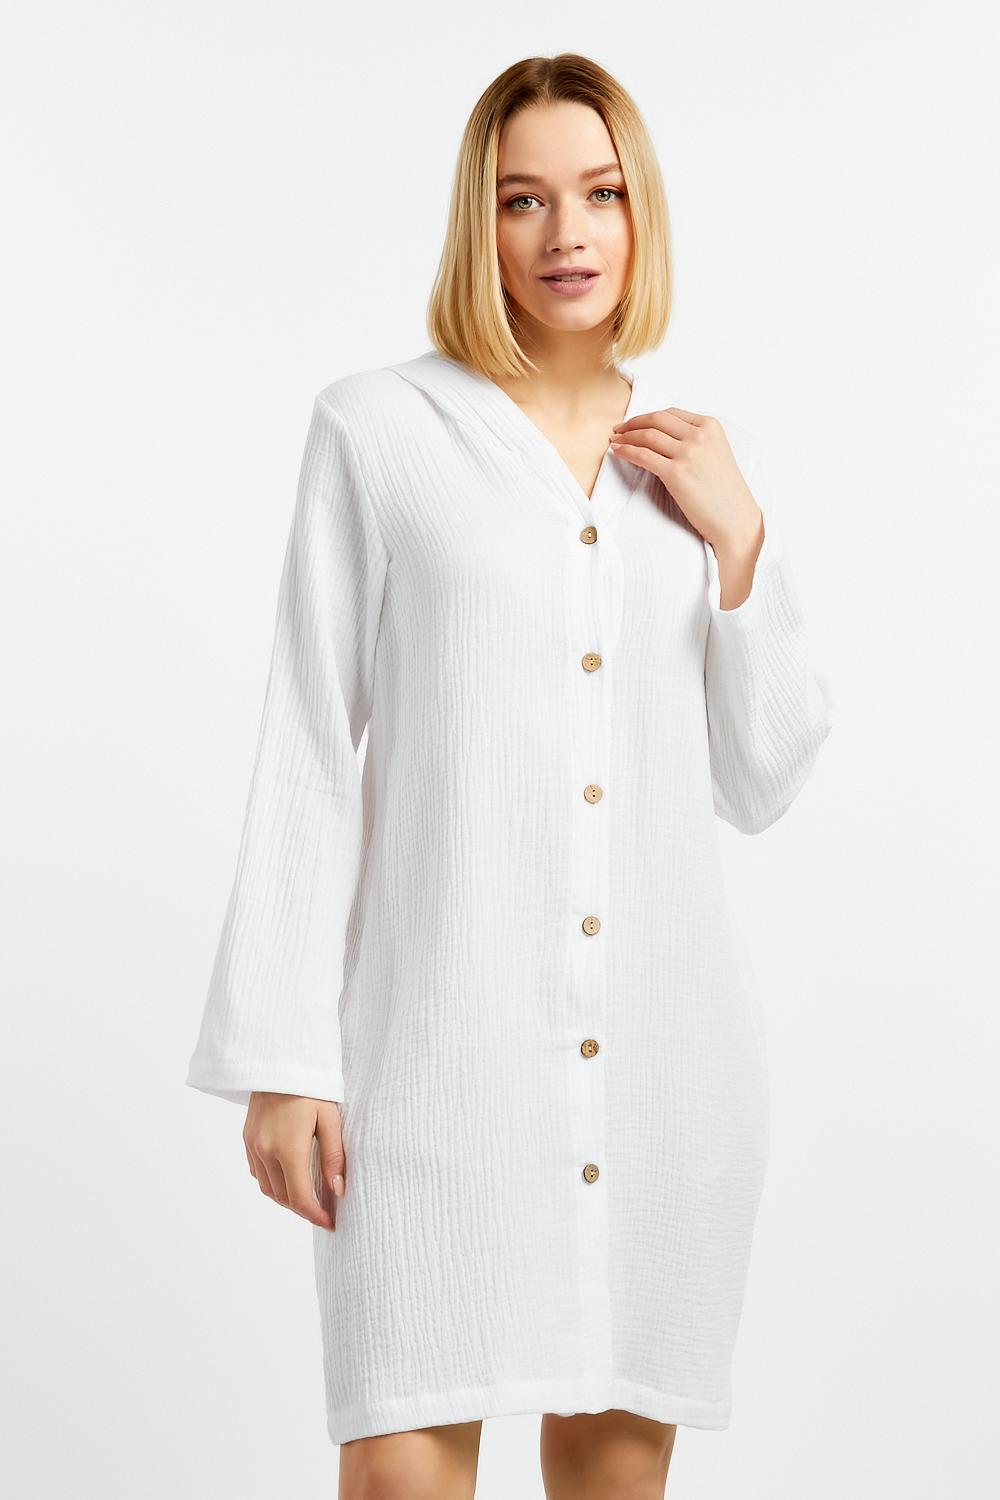 Платье женское LikaDress 18-1689 белое 48 RU